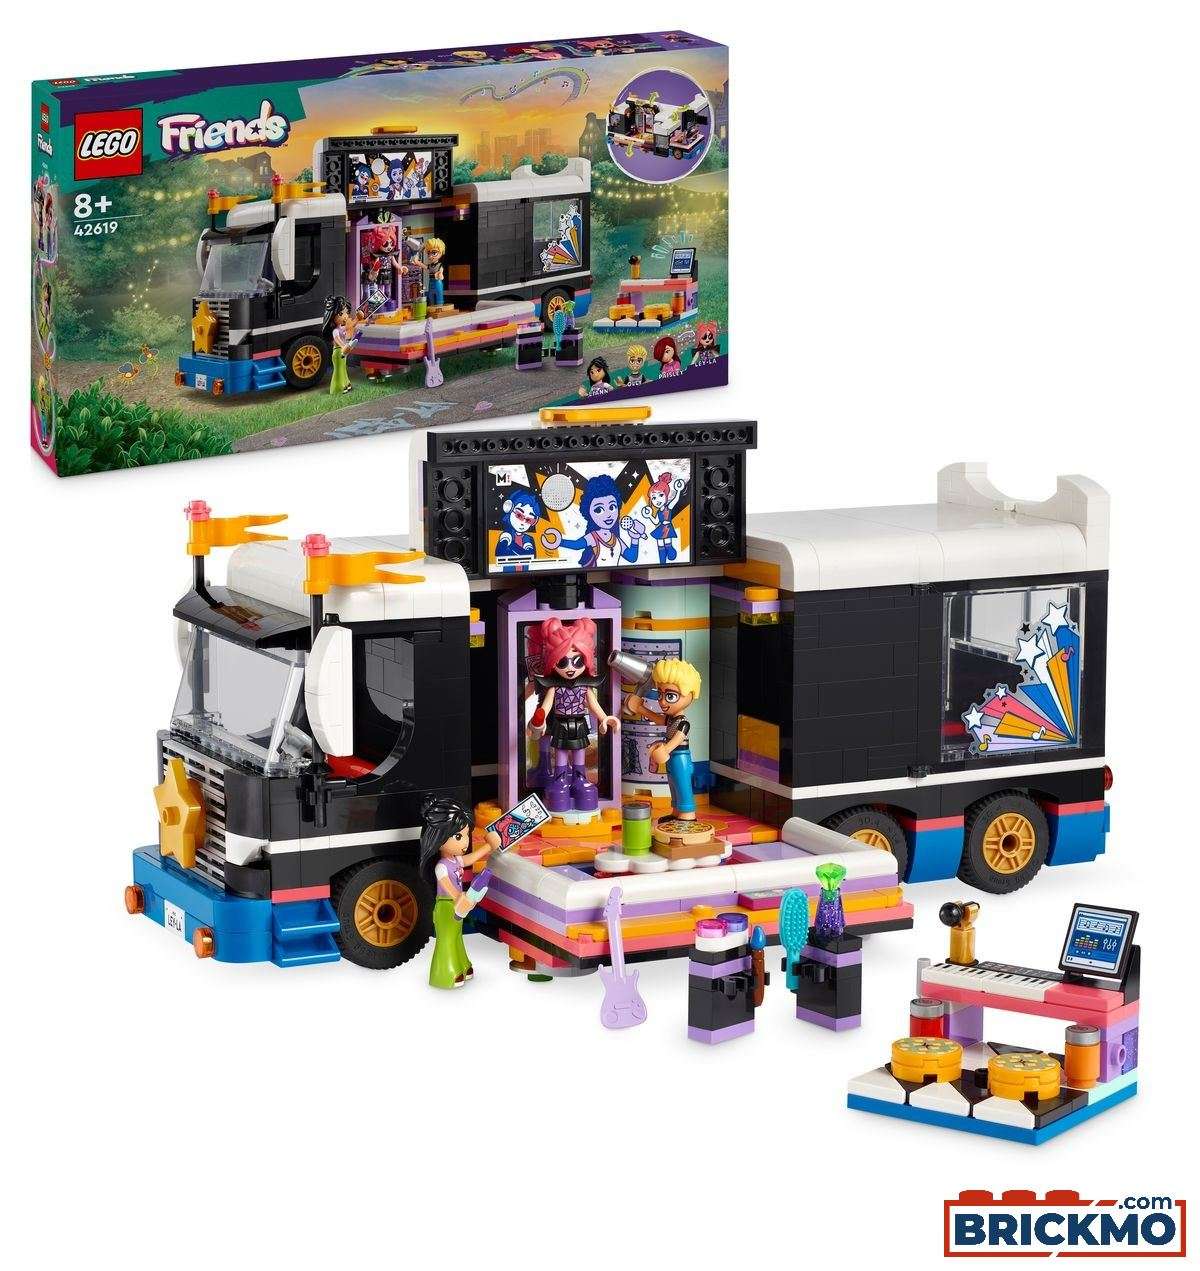 LEGO Friends 42619 Popstar-Tourbus 42619